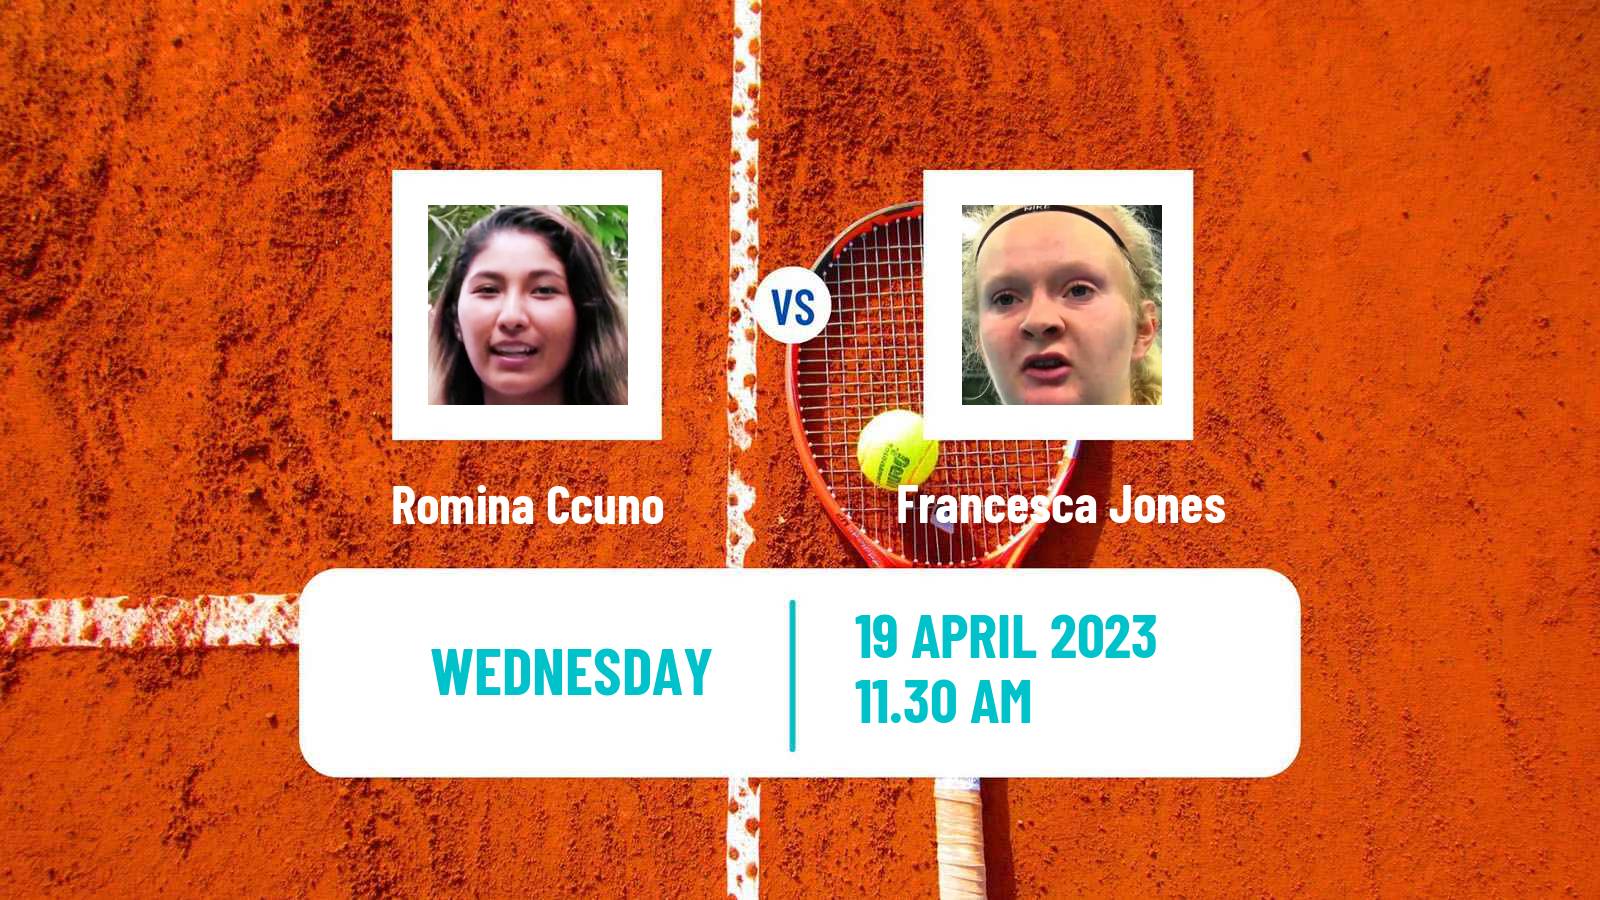 Tennis ITF Tournaments Romina Ccuno - Francesca Jones